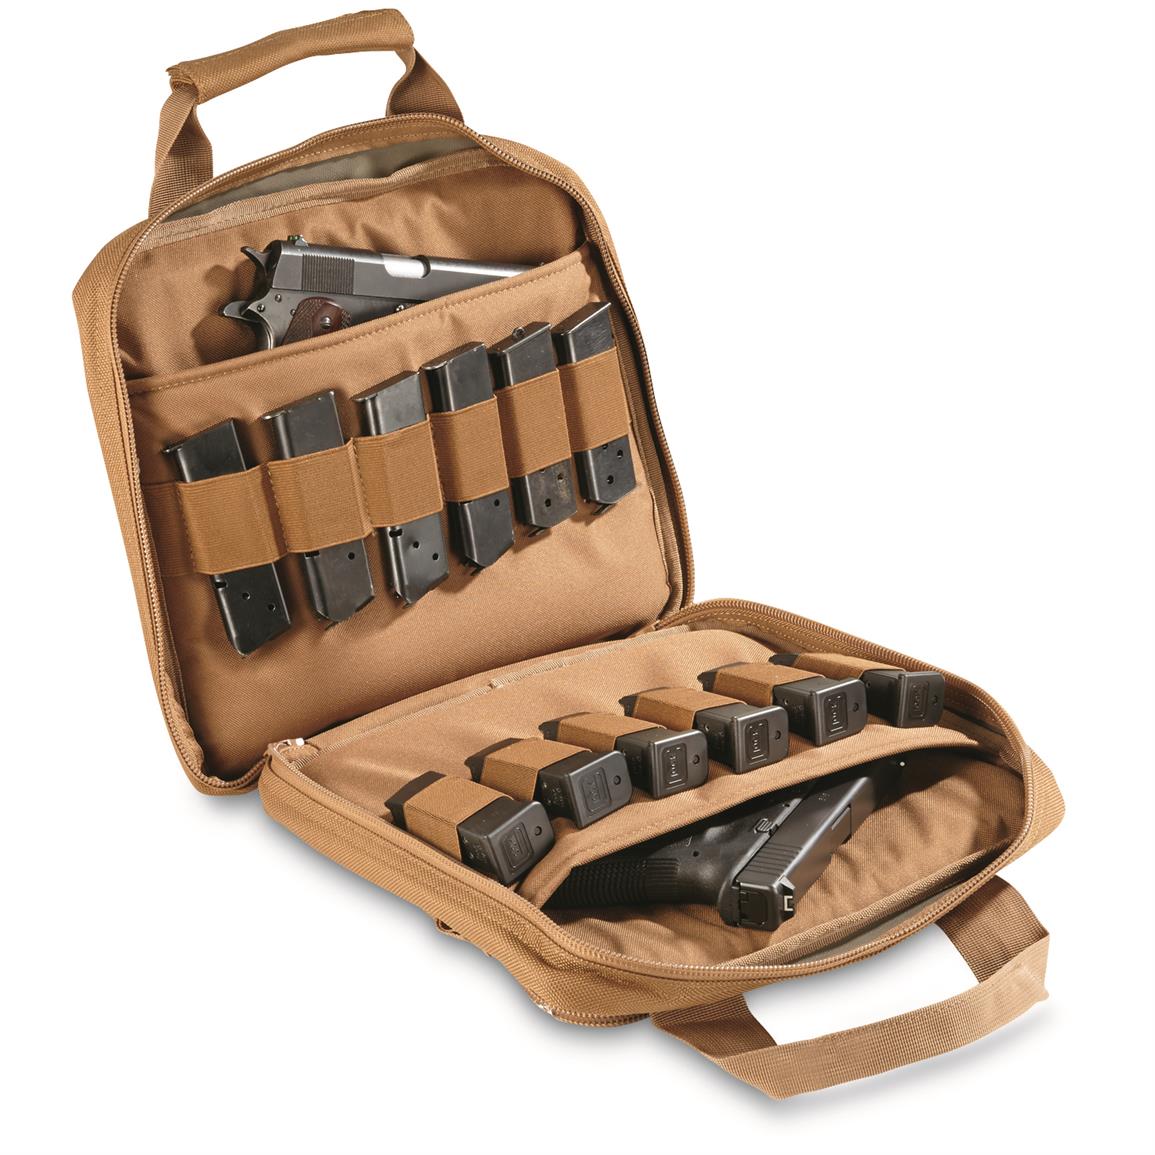 Double Pistol Tactical Gun Case - 680205, Gun Cases at Sportsman's Guide